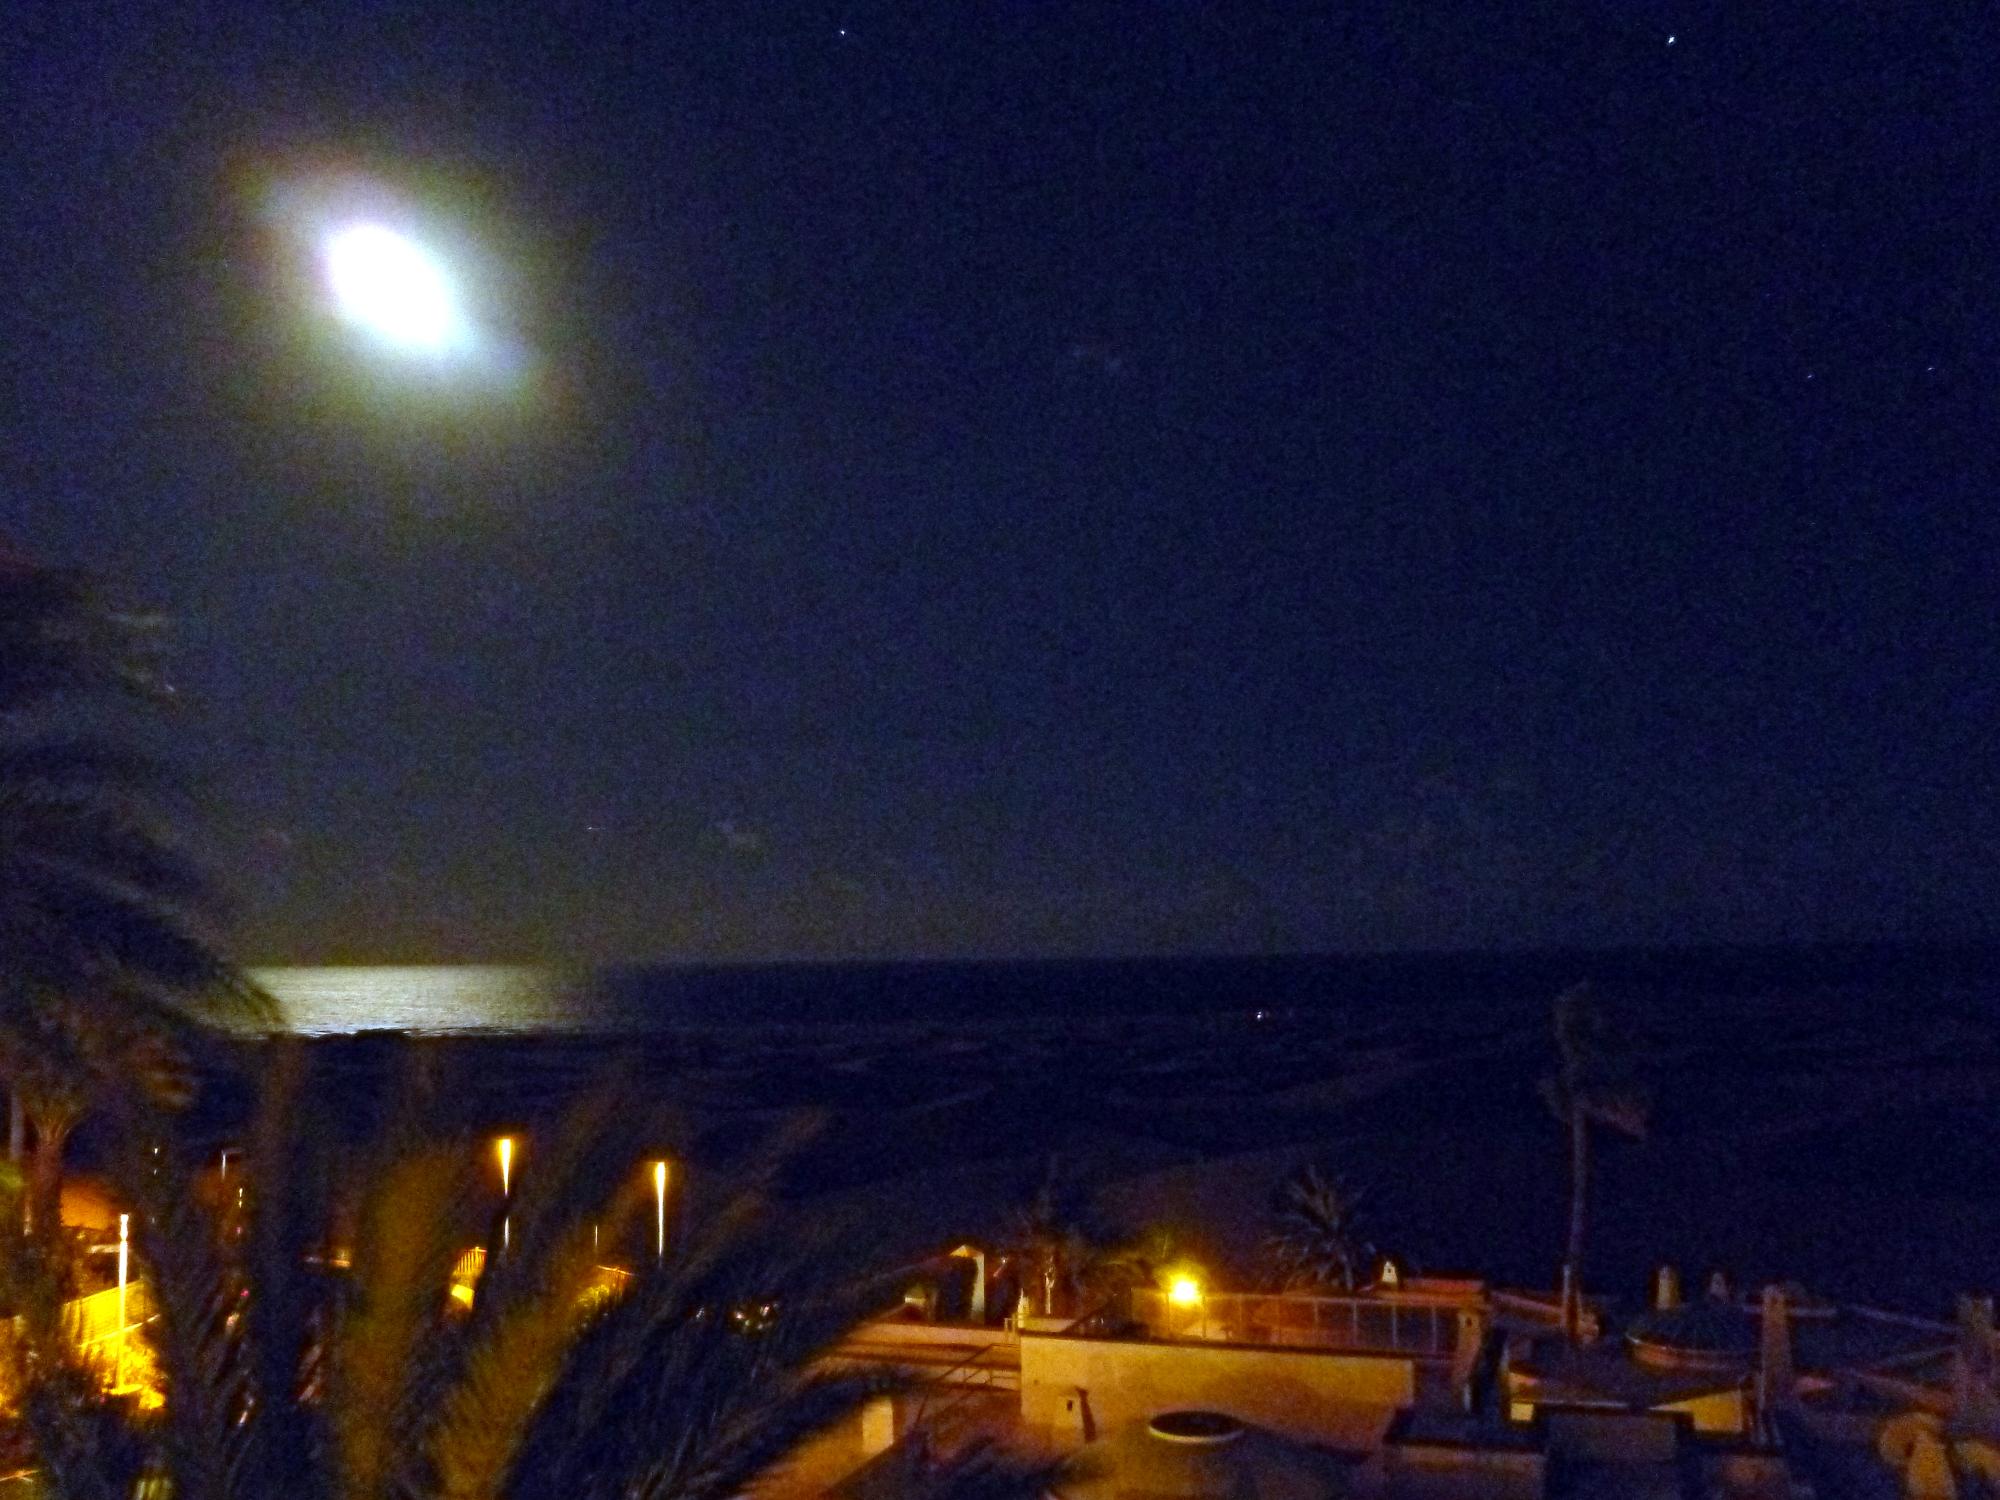  Canary Islands - Moonlight